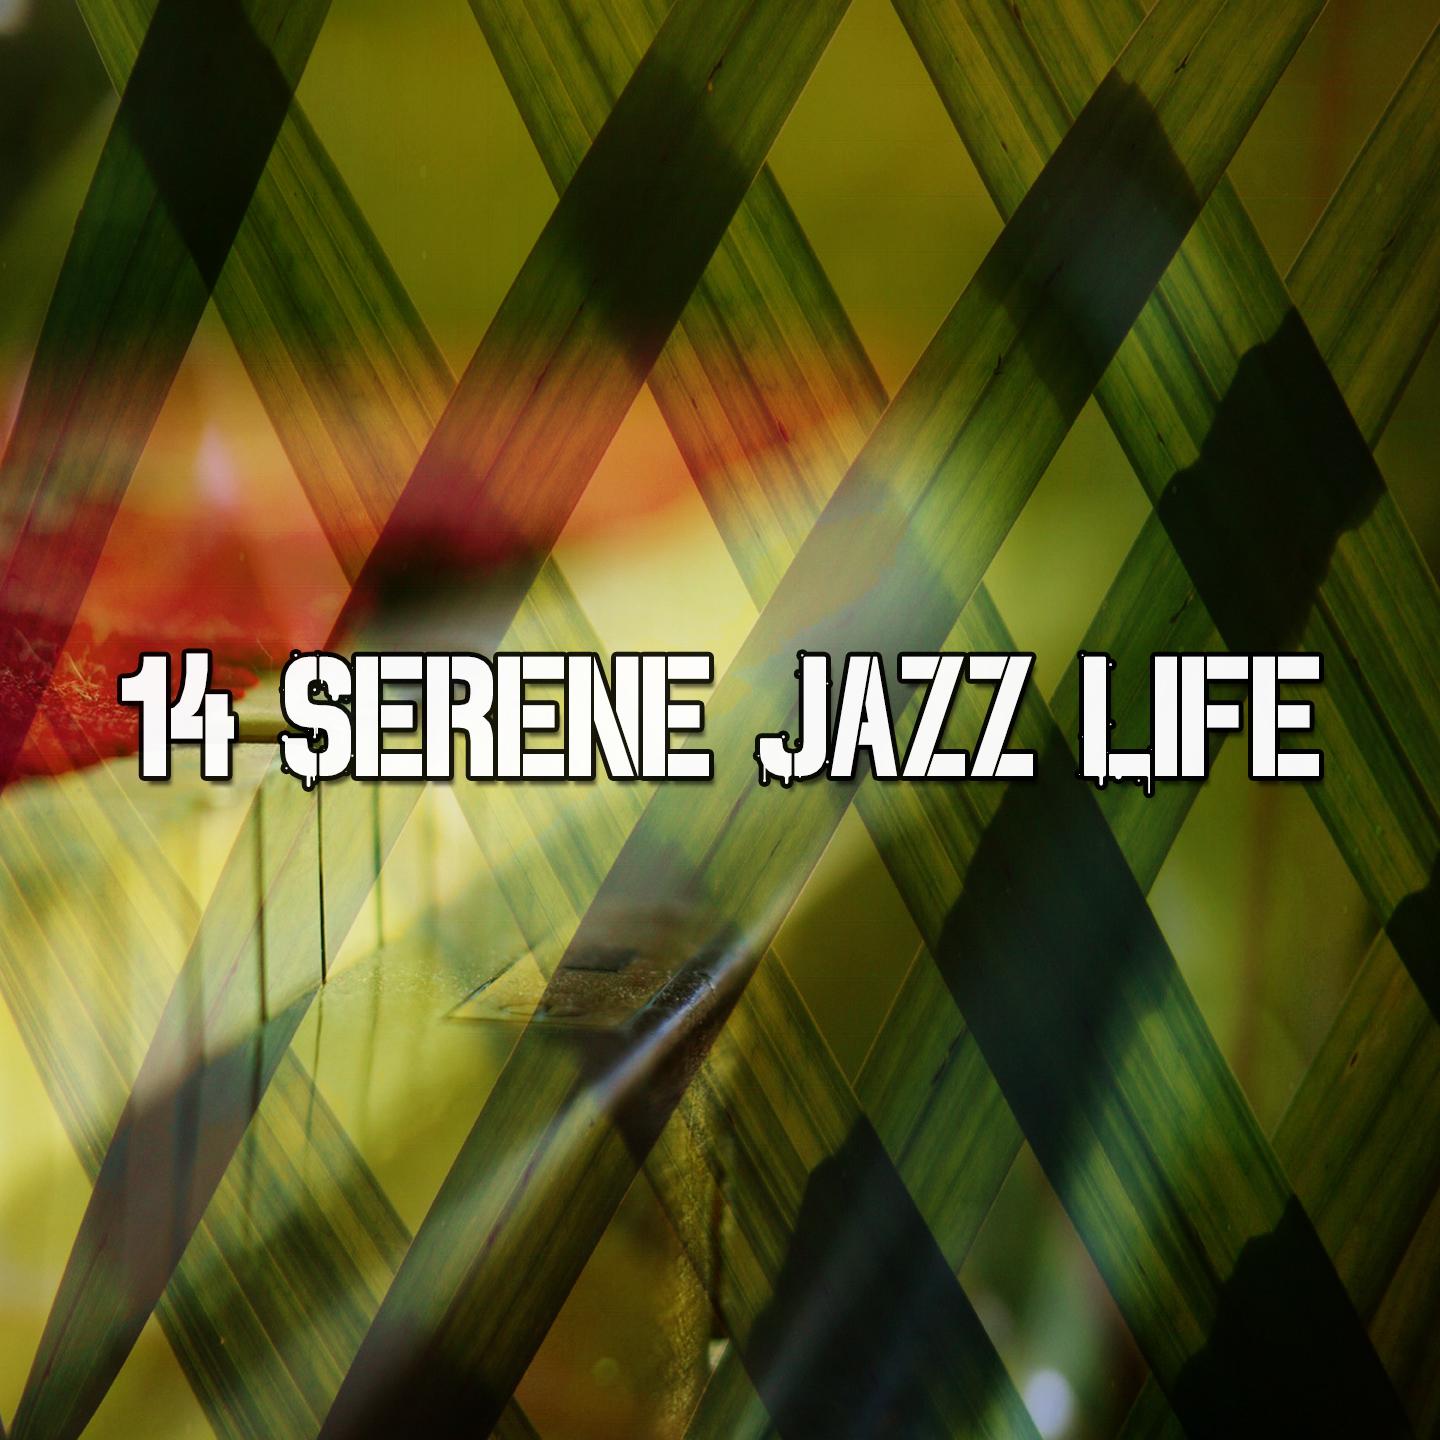 14 Serene Jazz Life